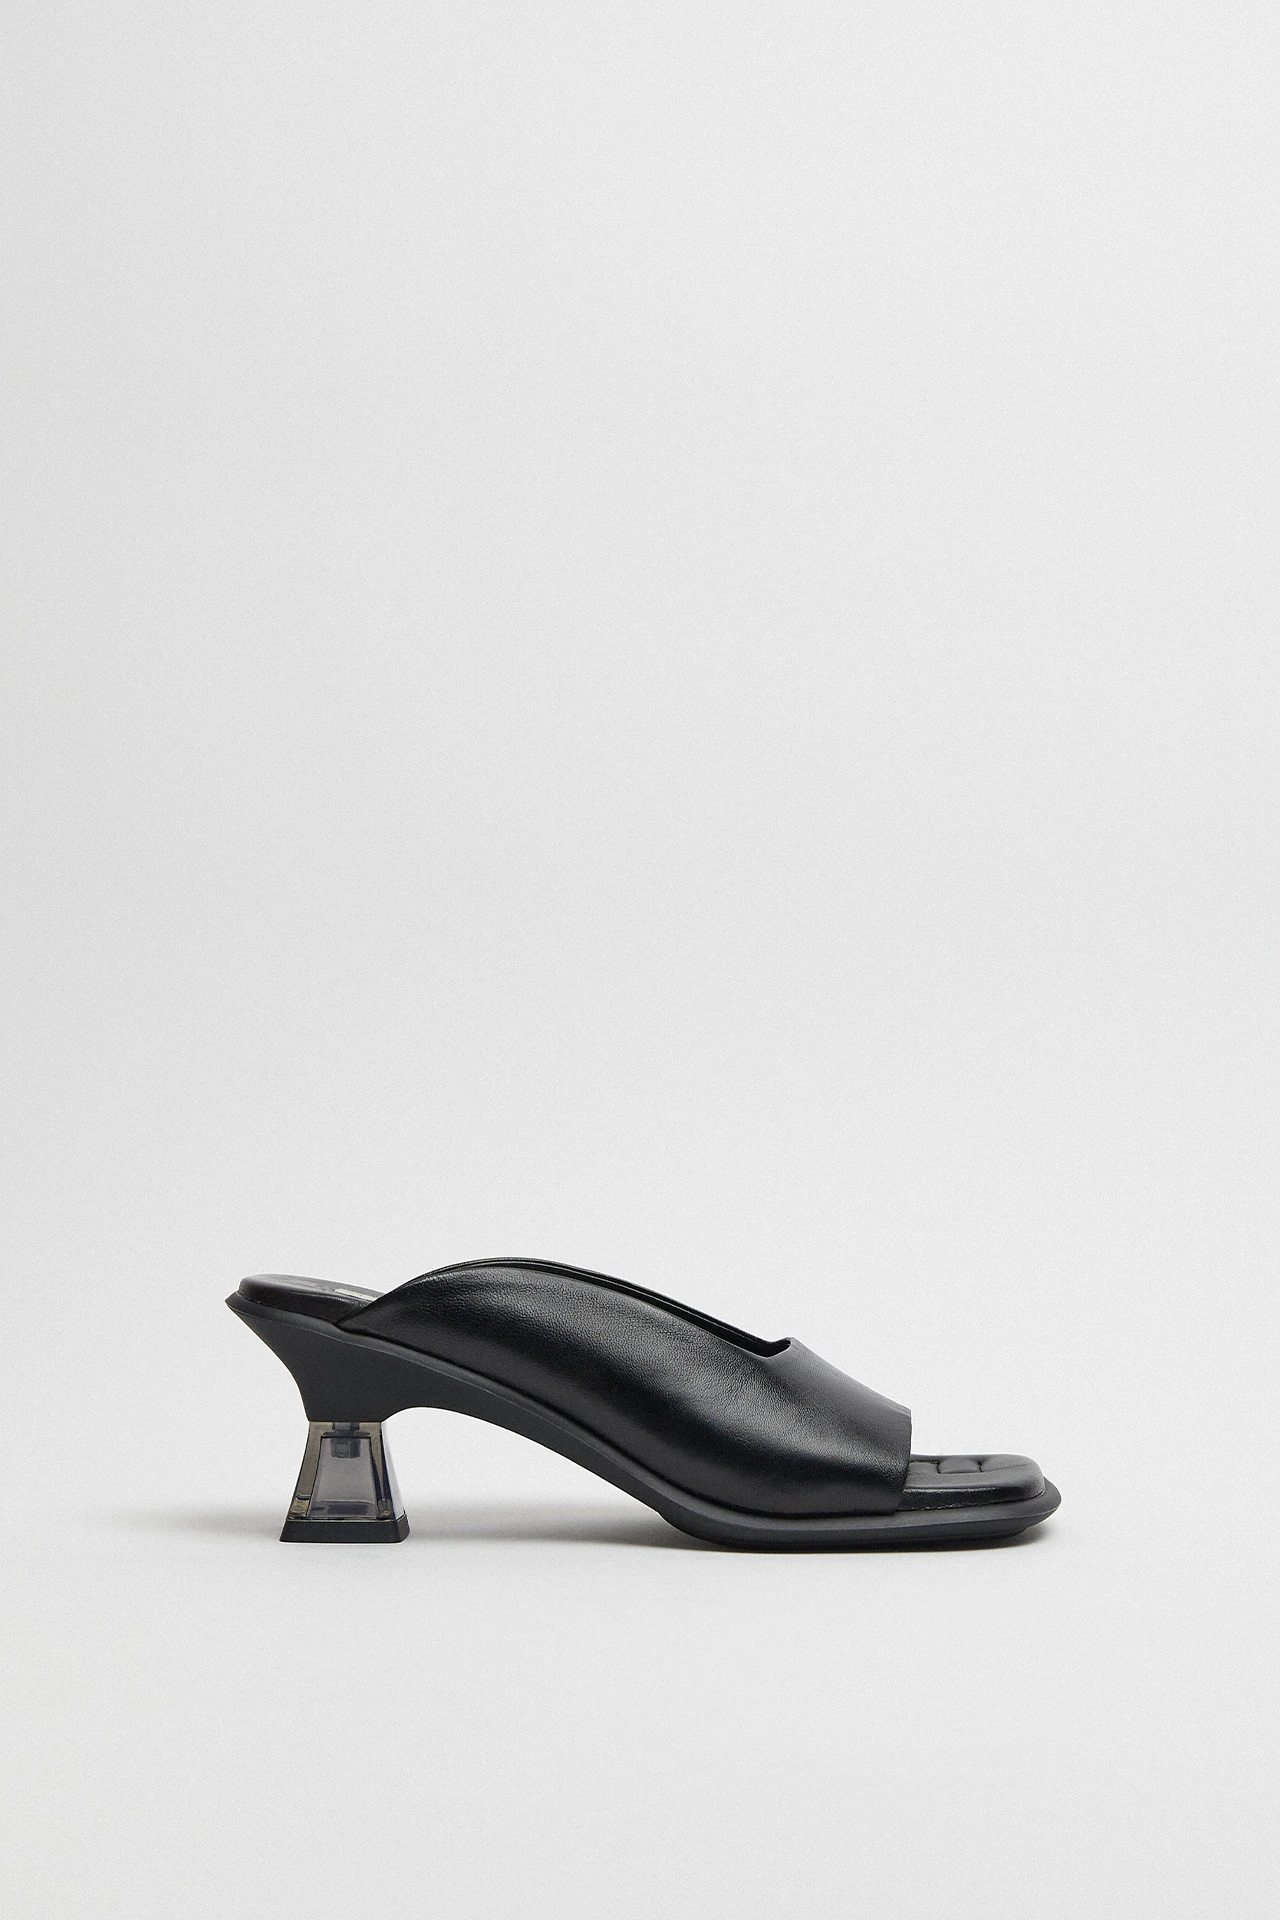 Miista-janaina-black-mule-sandals-01